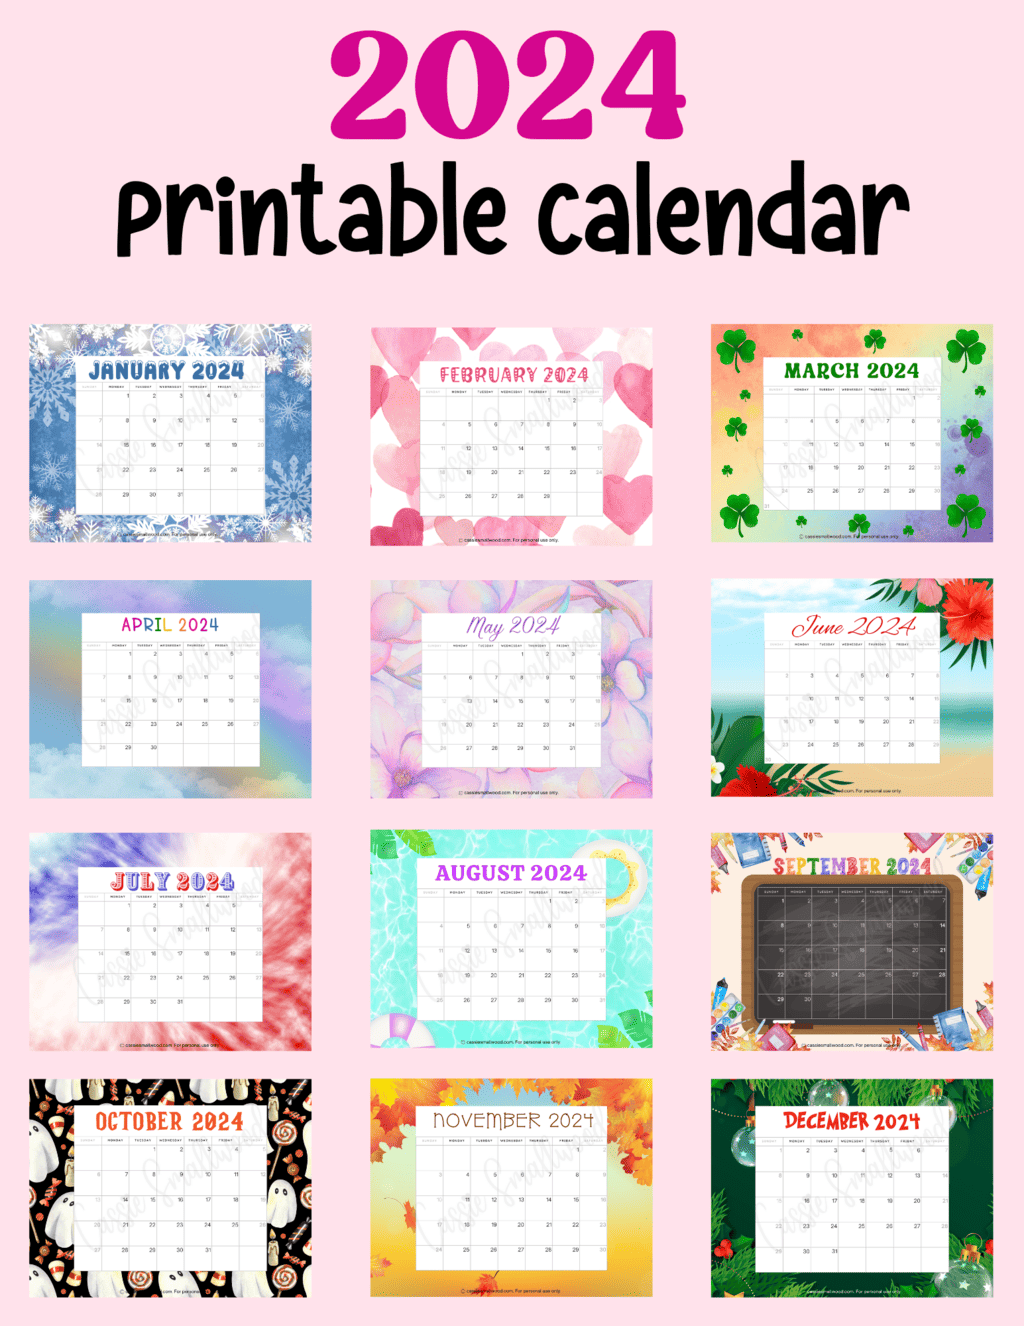 Cute Free Printable Monthly Calendar 2024 - Cassie Smallwood for Printable 2024 Calendar Cute